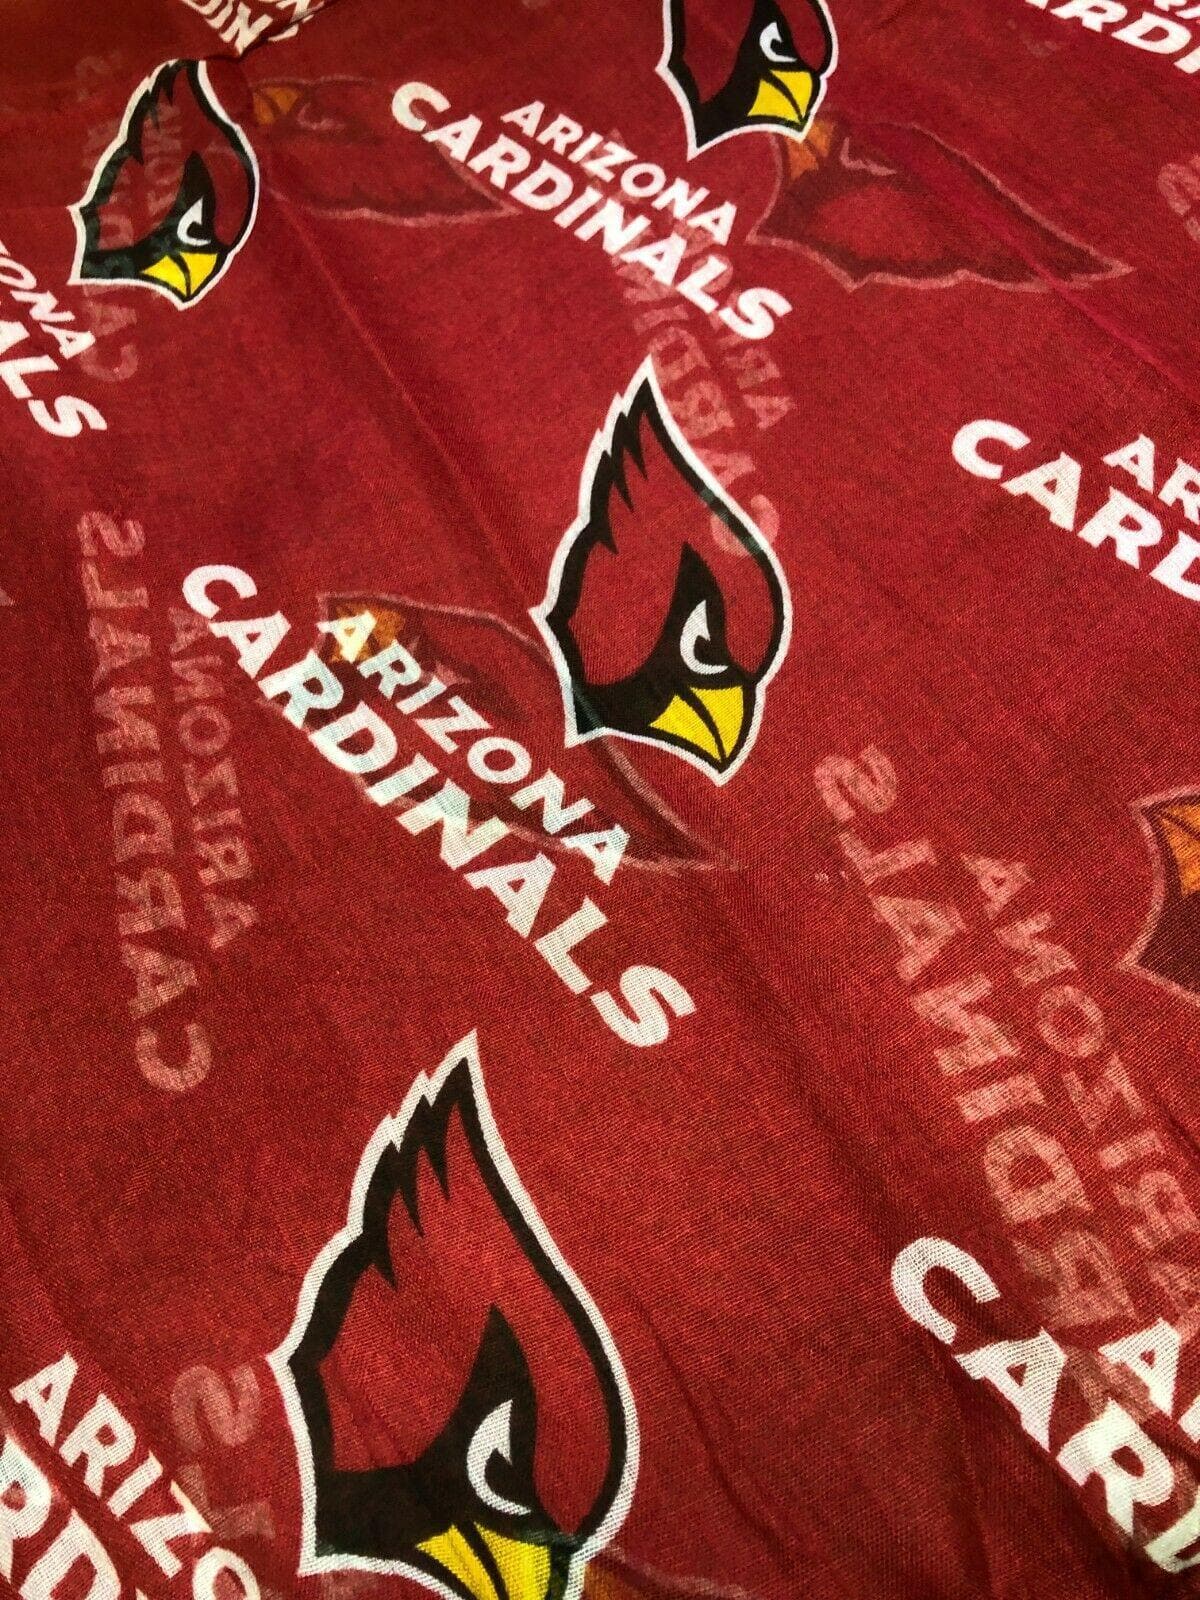 NFL Arizona Cardinals Infinity Scarf Great Gift NWT